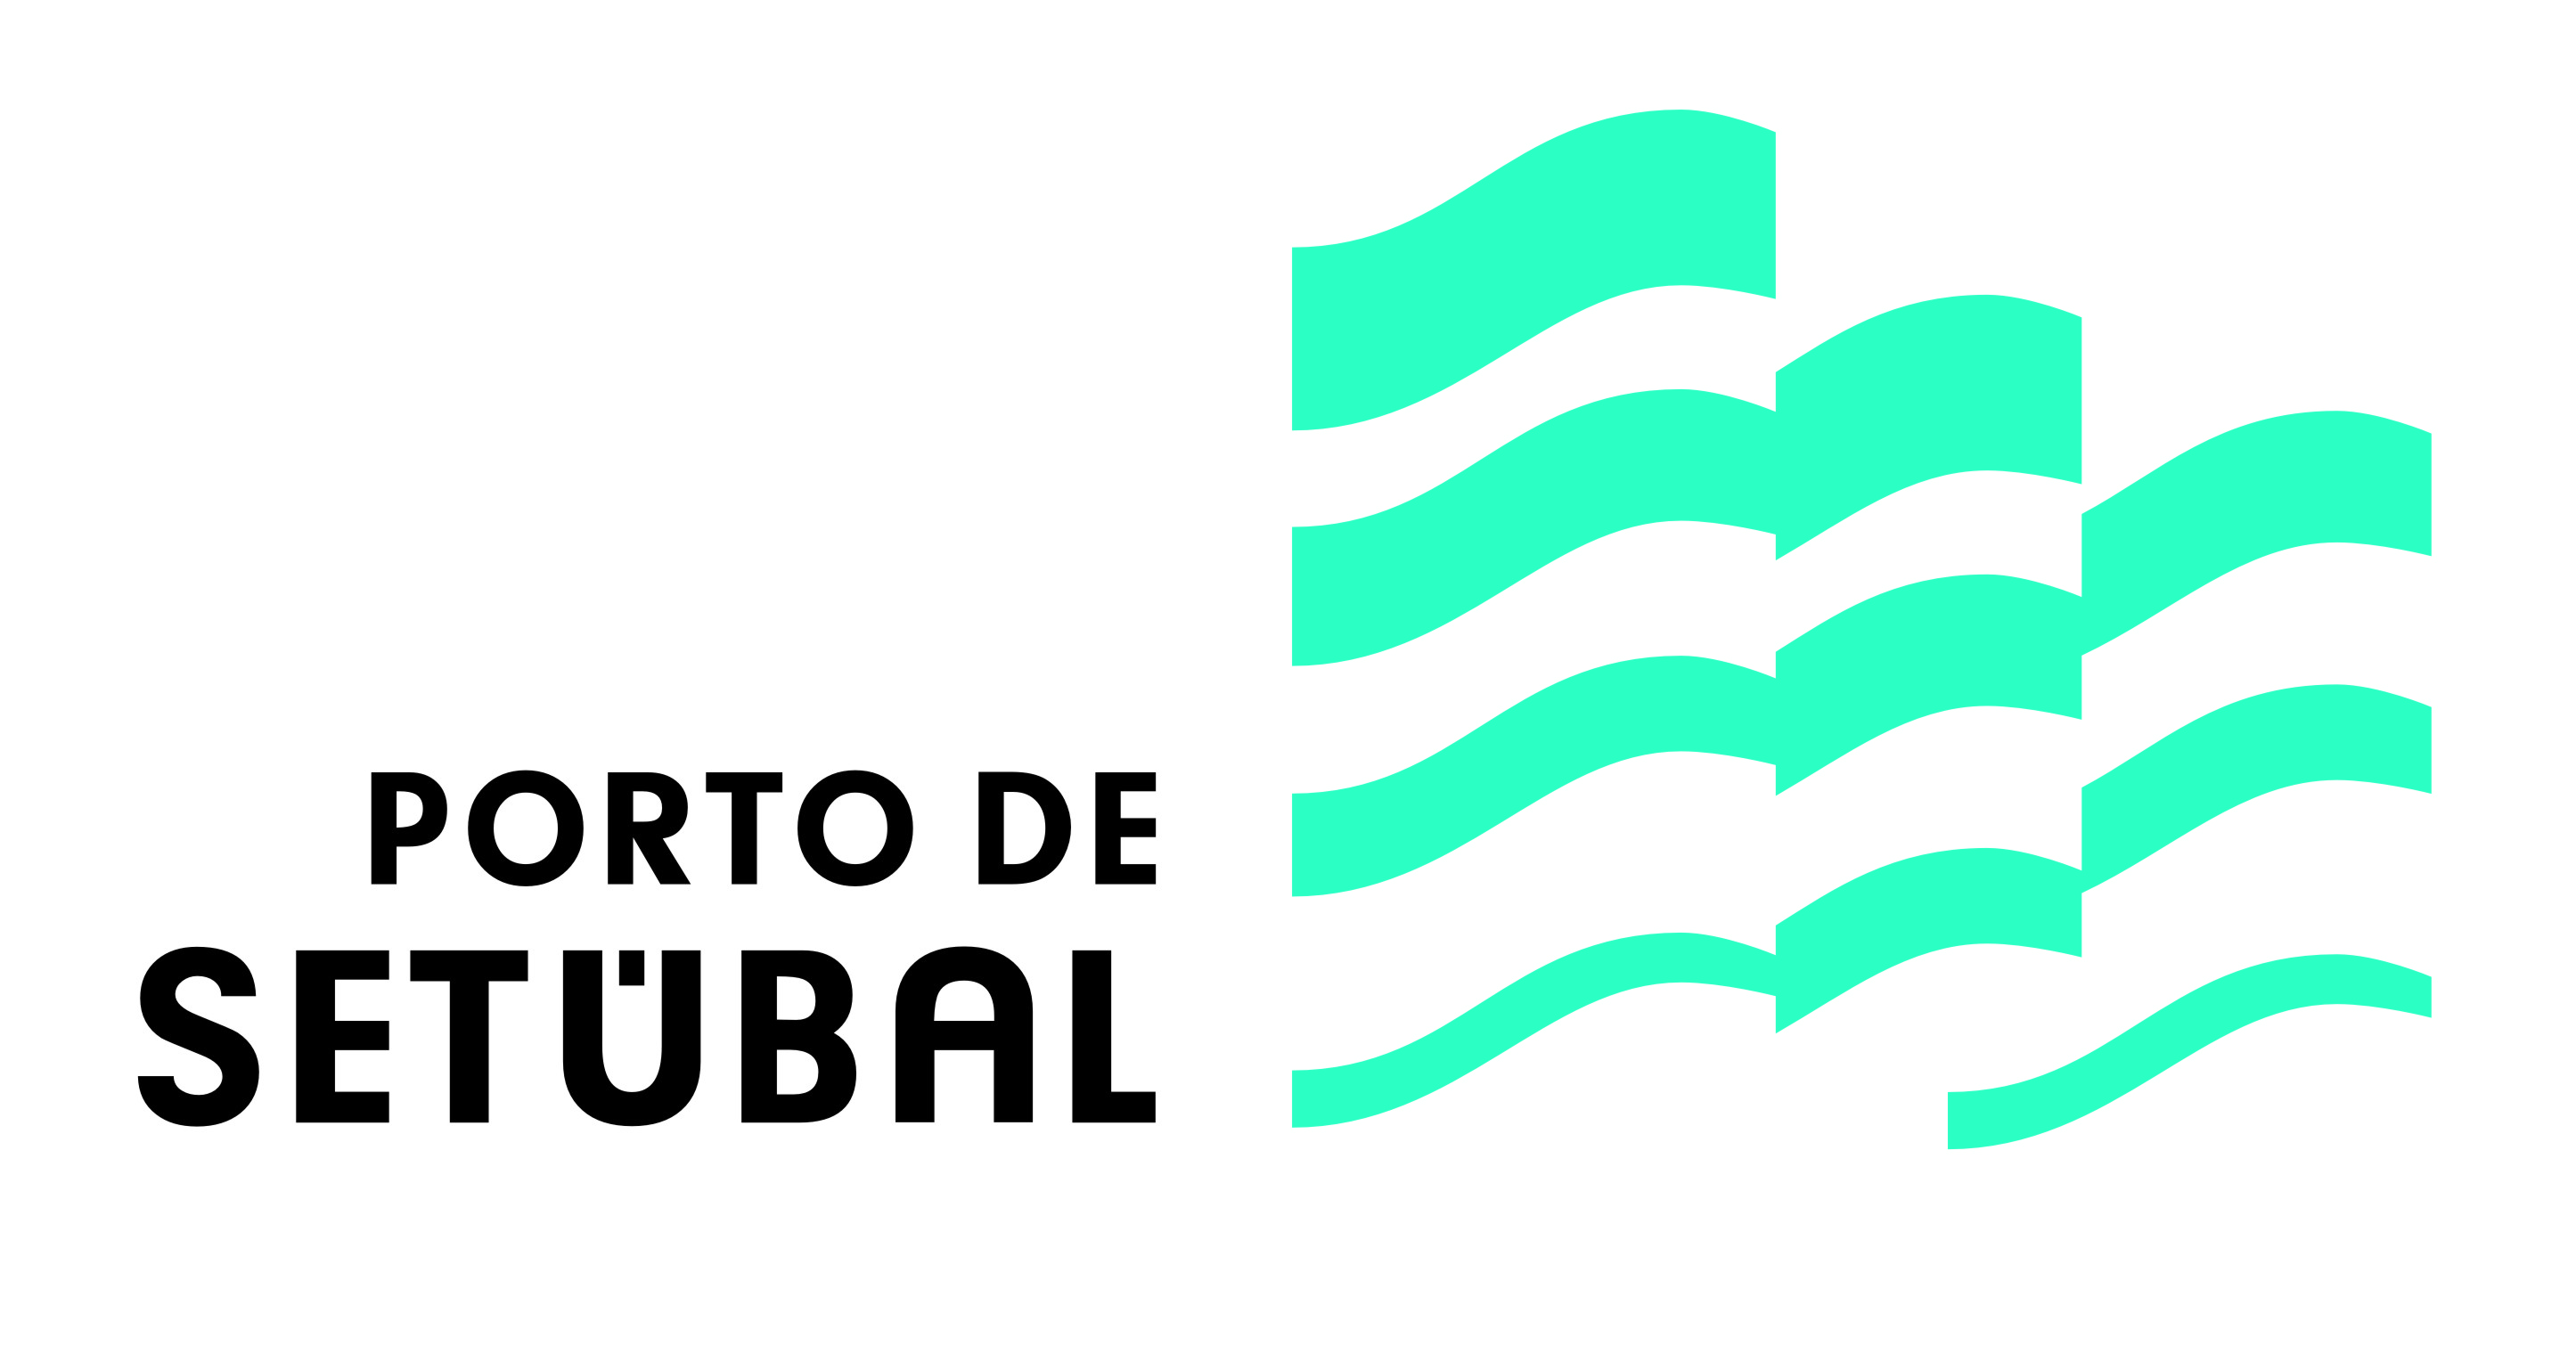 Port of Setúbal